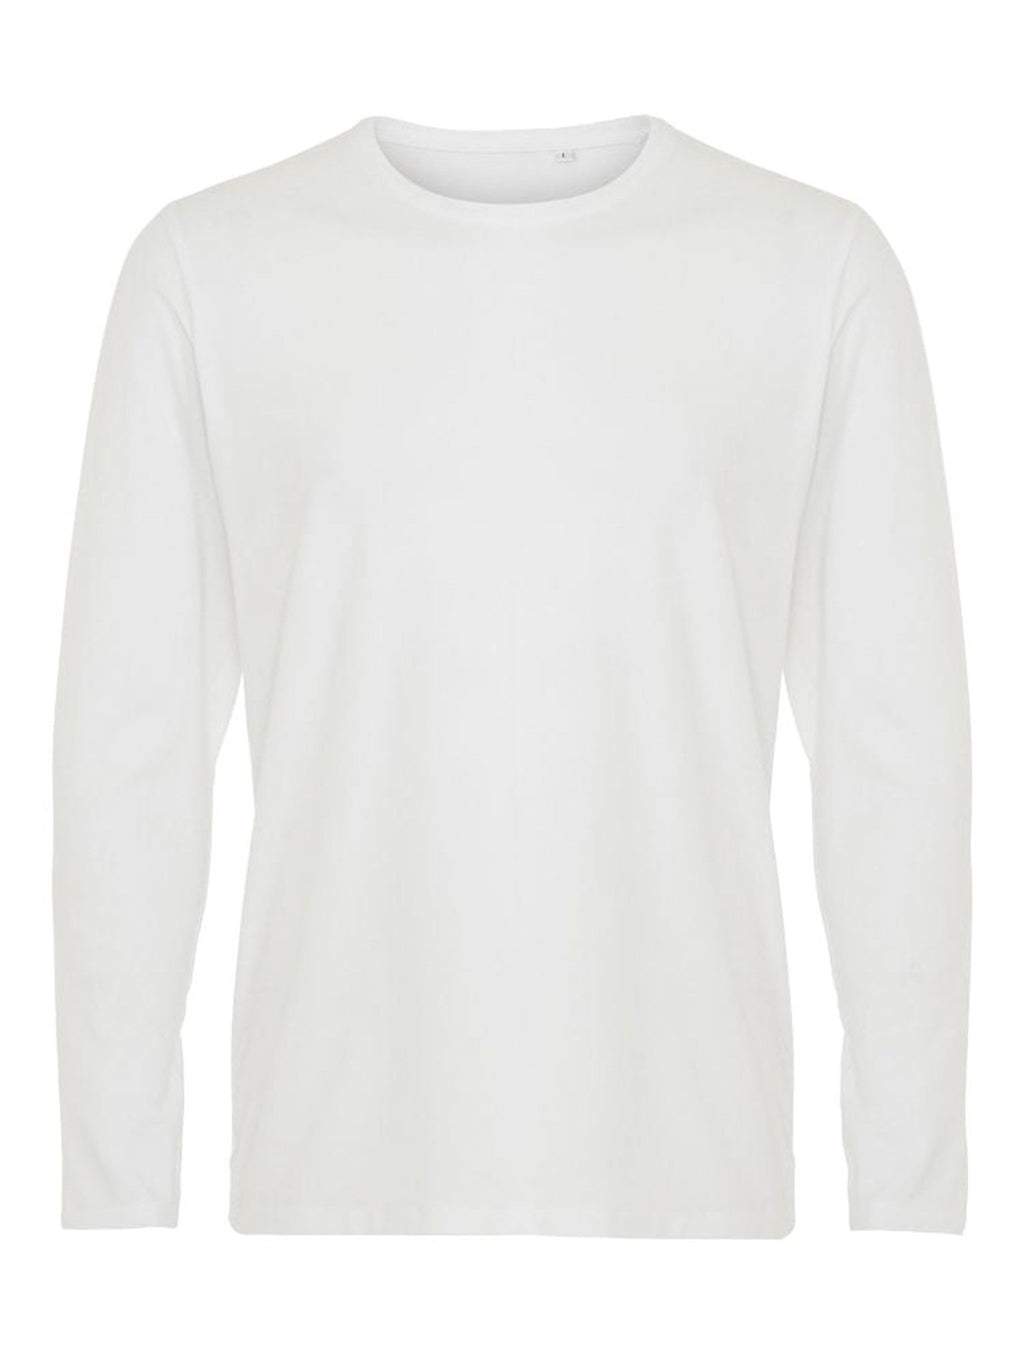 Langærmet Muscle T-shirt - Hvid